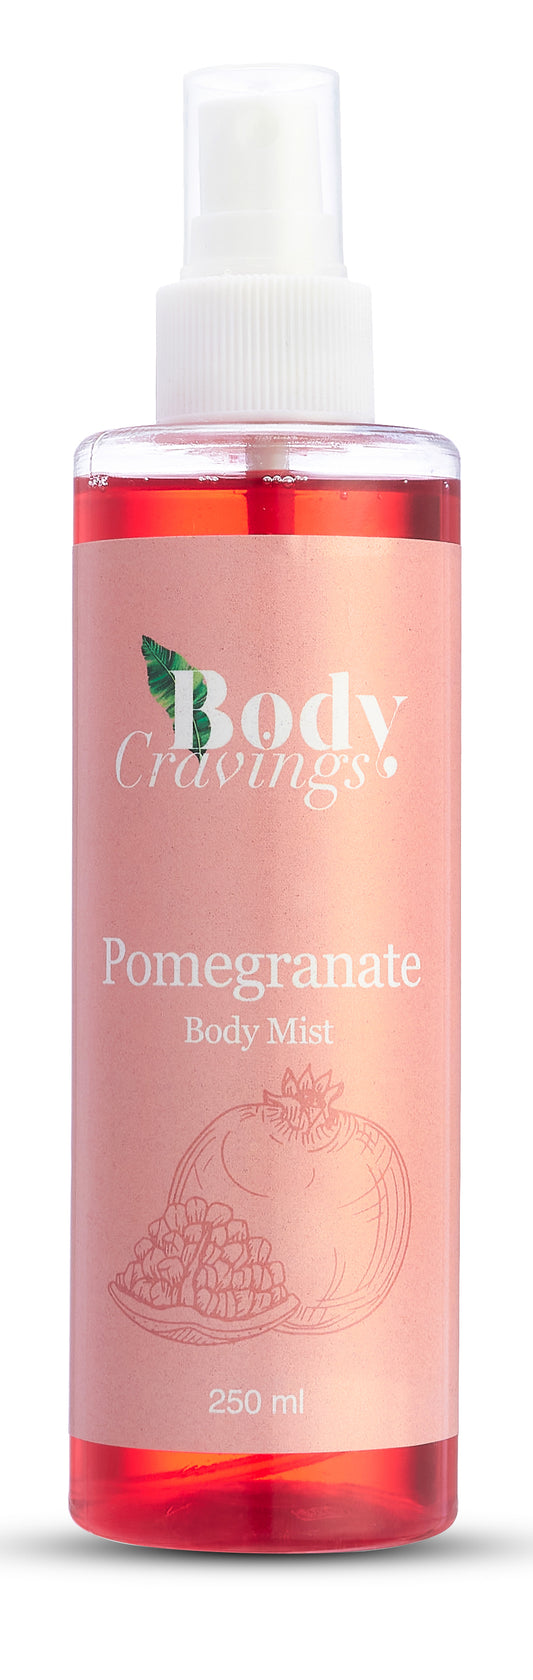 Pomegranate Body Mist